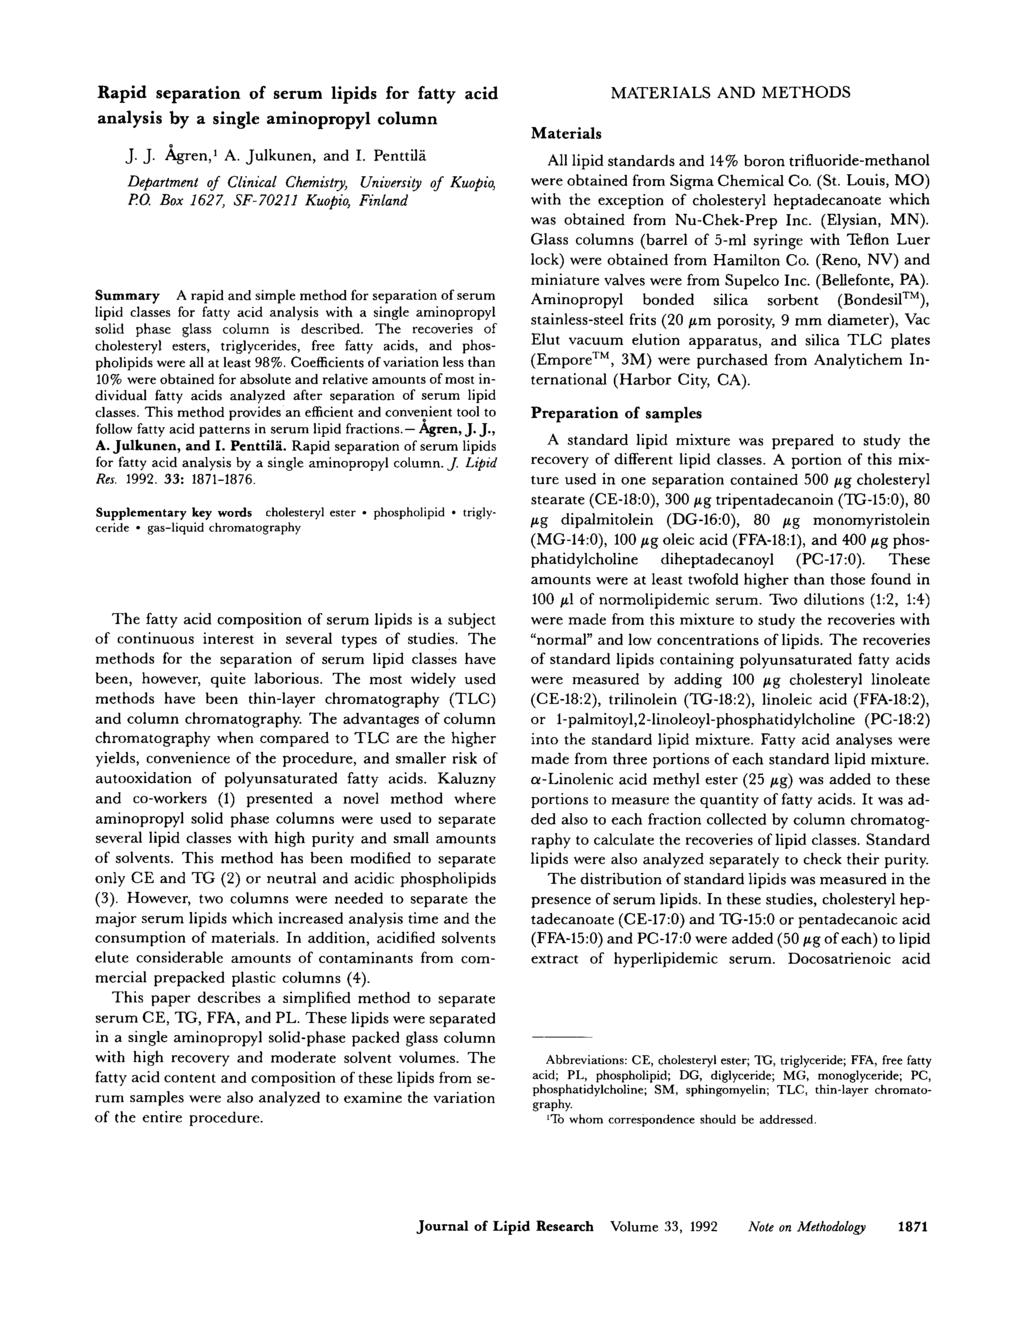 Rapid separation of serum lipids for fatty acid analysis by a single aminopropyl column J. J. &yen,] A. Julkunen, and I. Penttila Department oj Clinical Chemisty, University of Kuopio, PO.